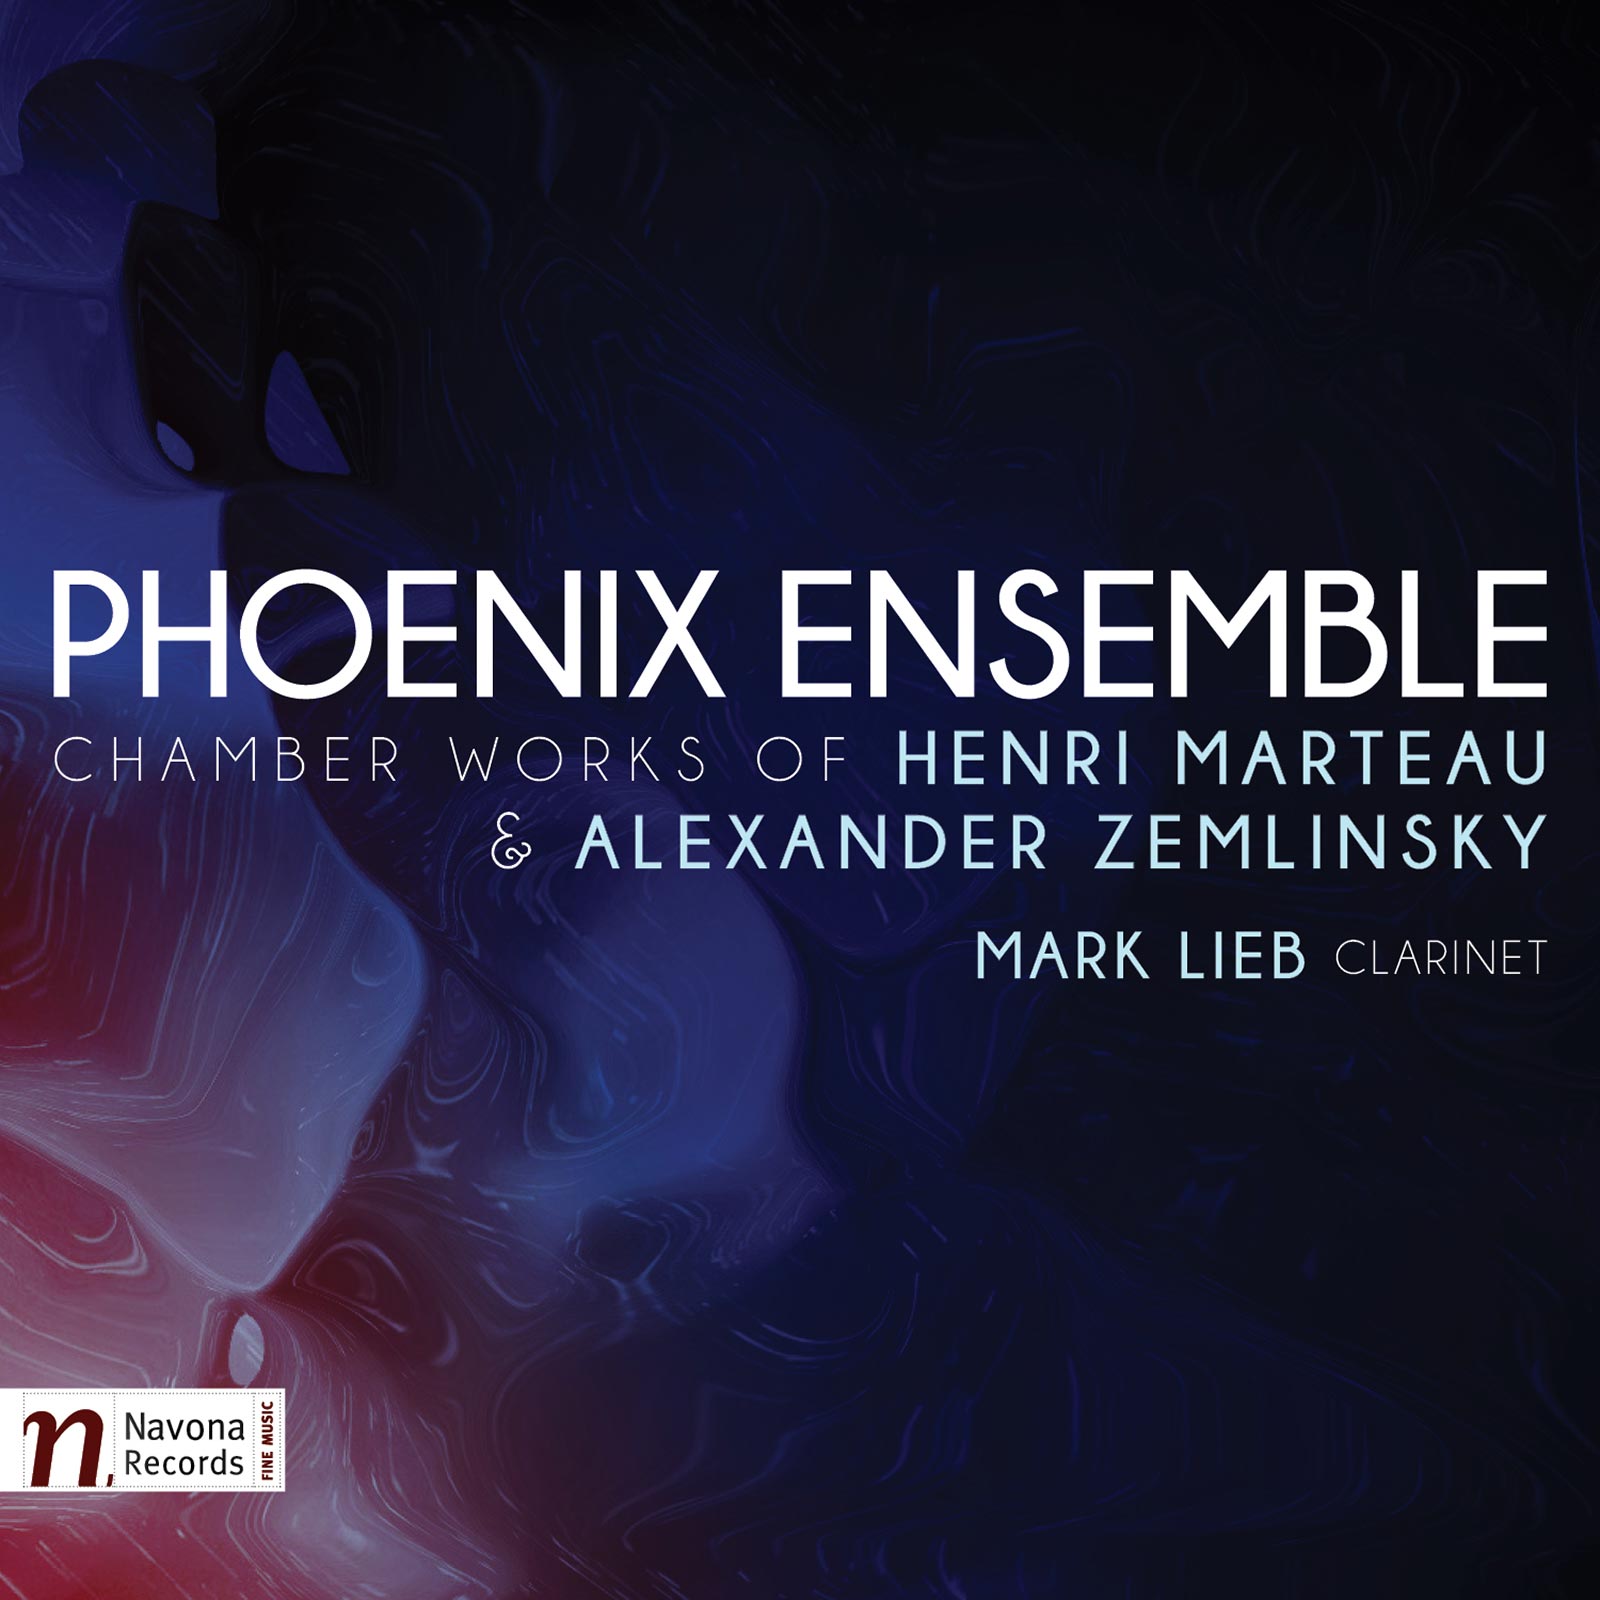 Pheonix Ensemble